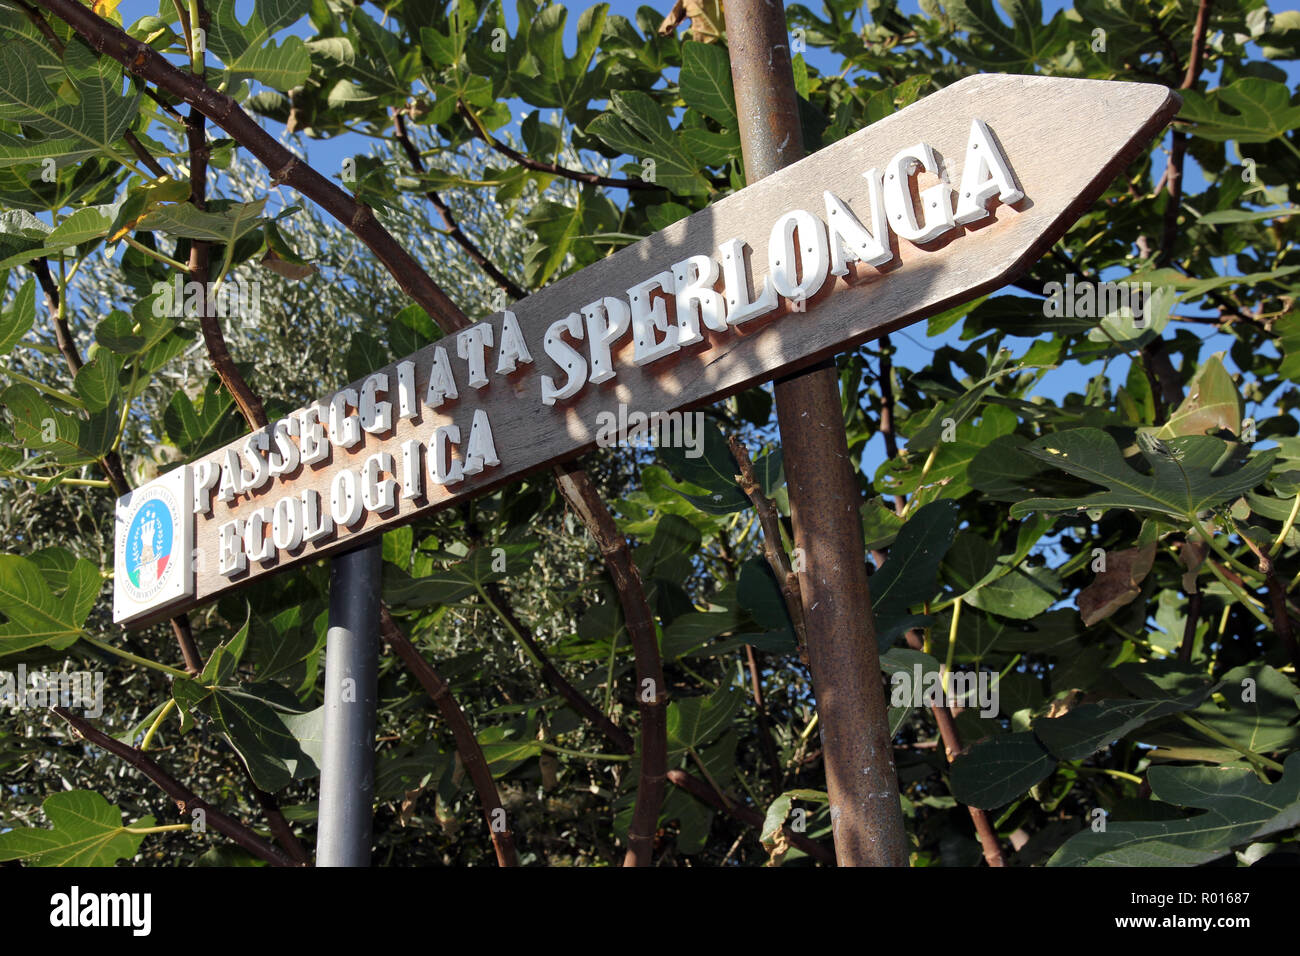 Passeggiata ecologica Sperlonga San Francesco Vico Equense Italien Stockfoto